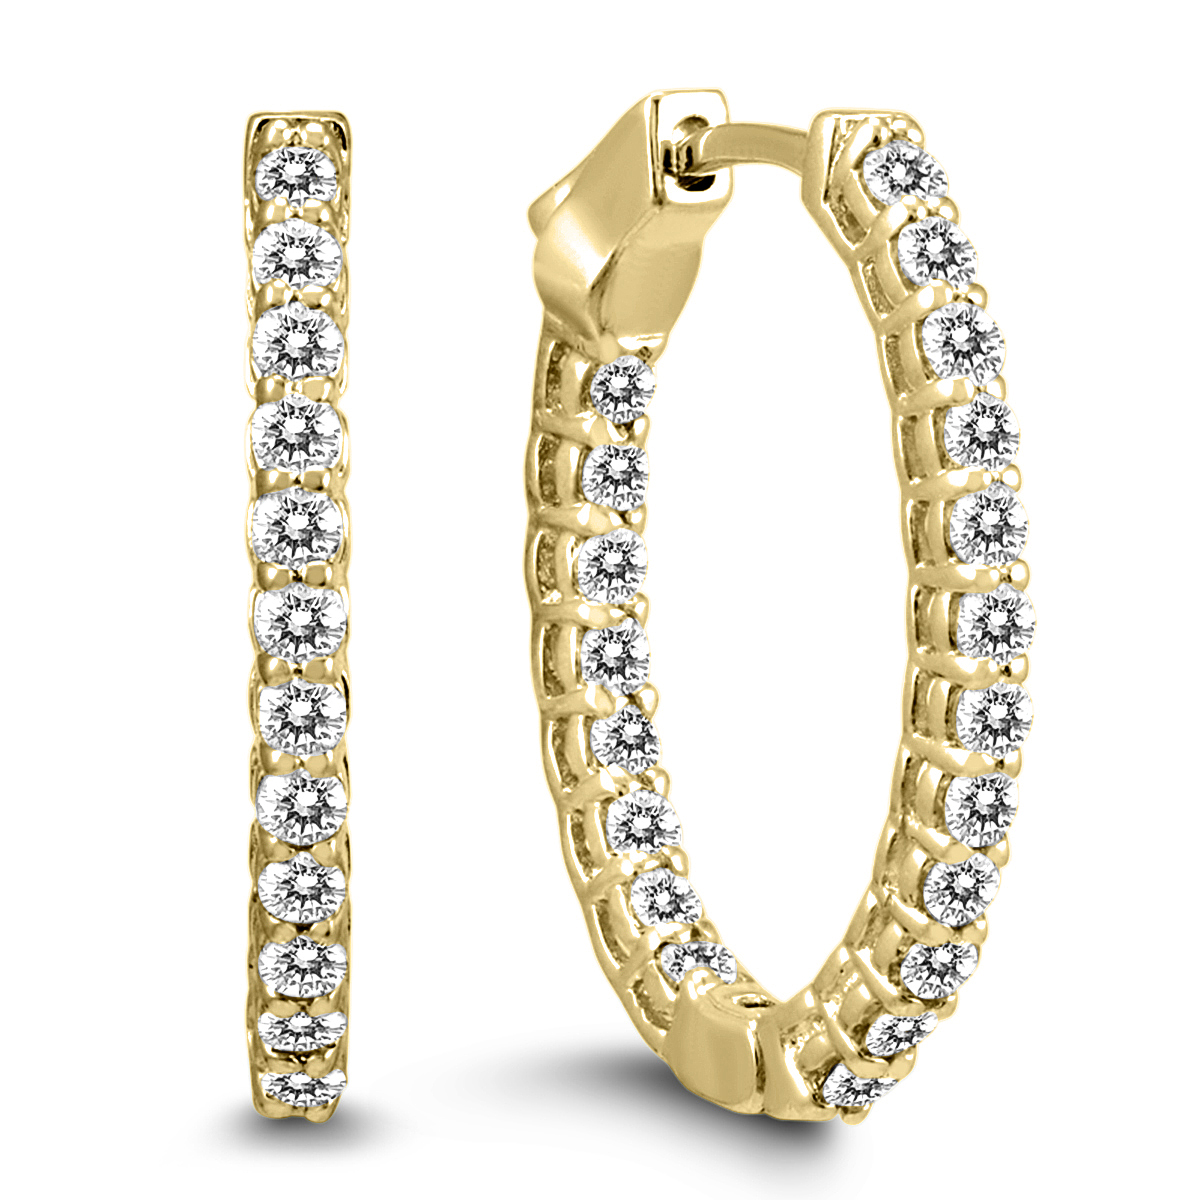 1 Carat TW Oval Diamond Hoop Earrings with Push Button Locks in 14K Yellow Gold